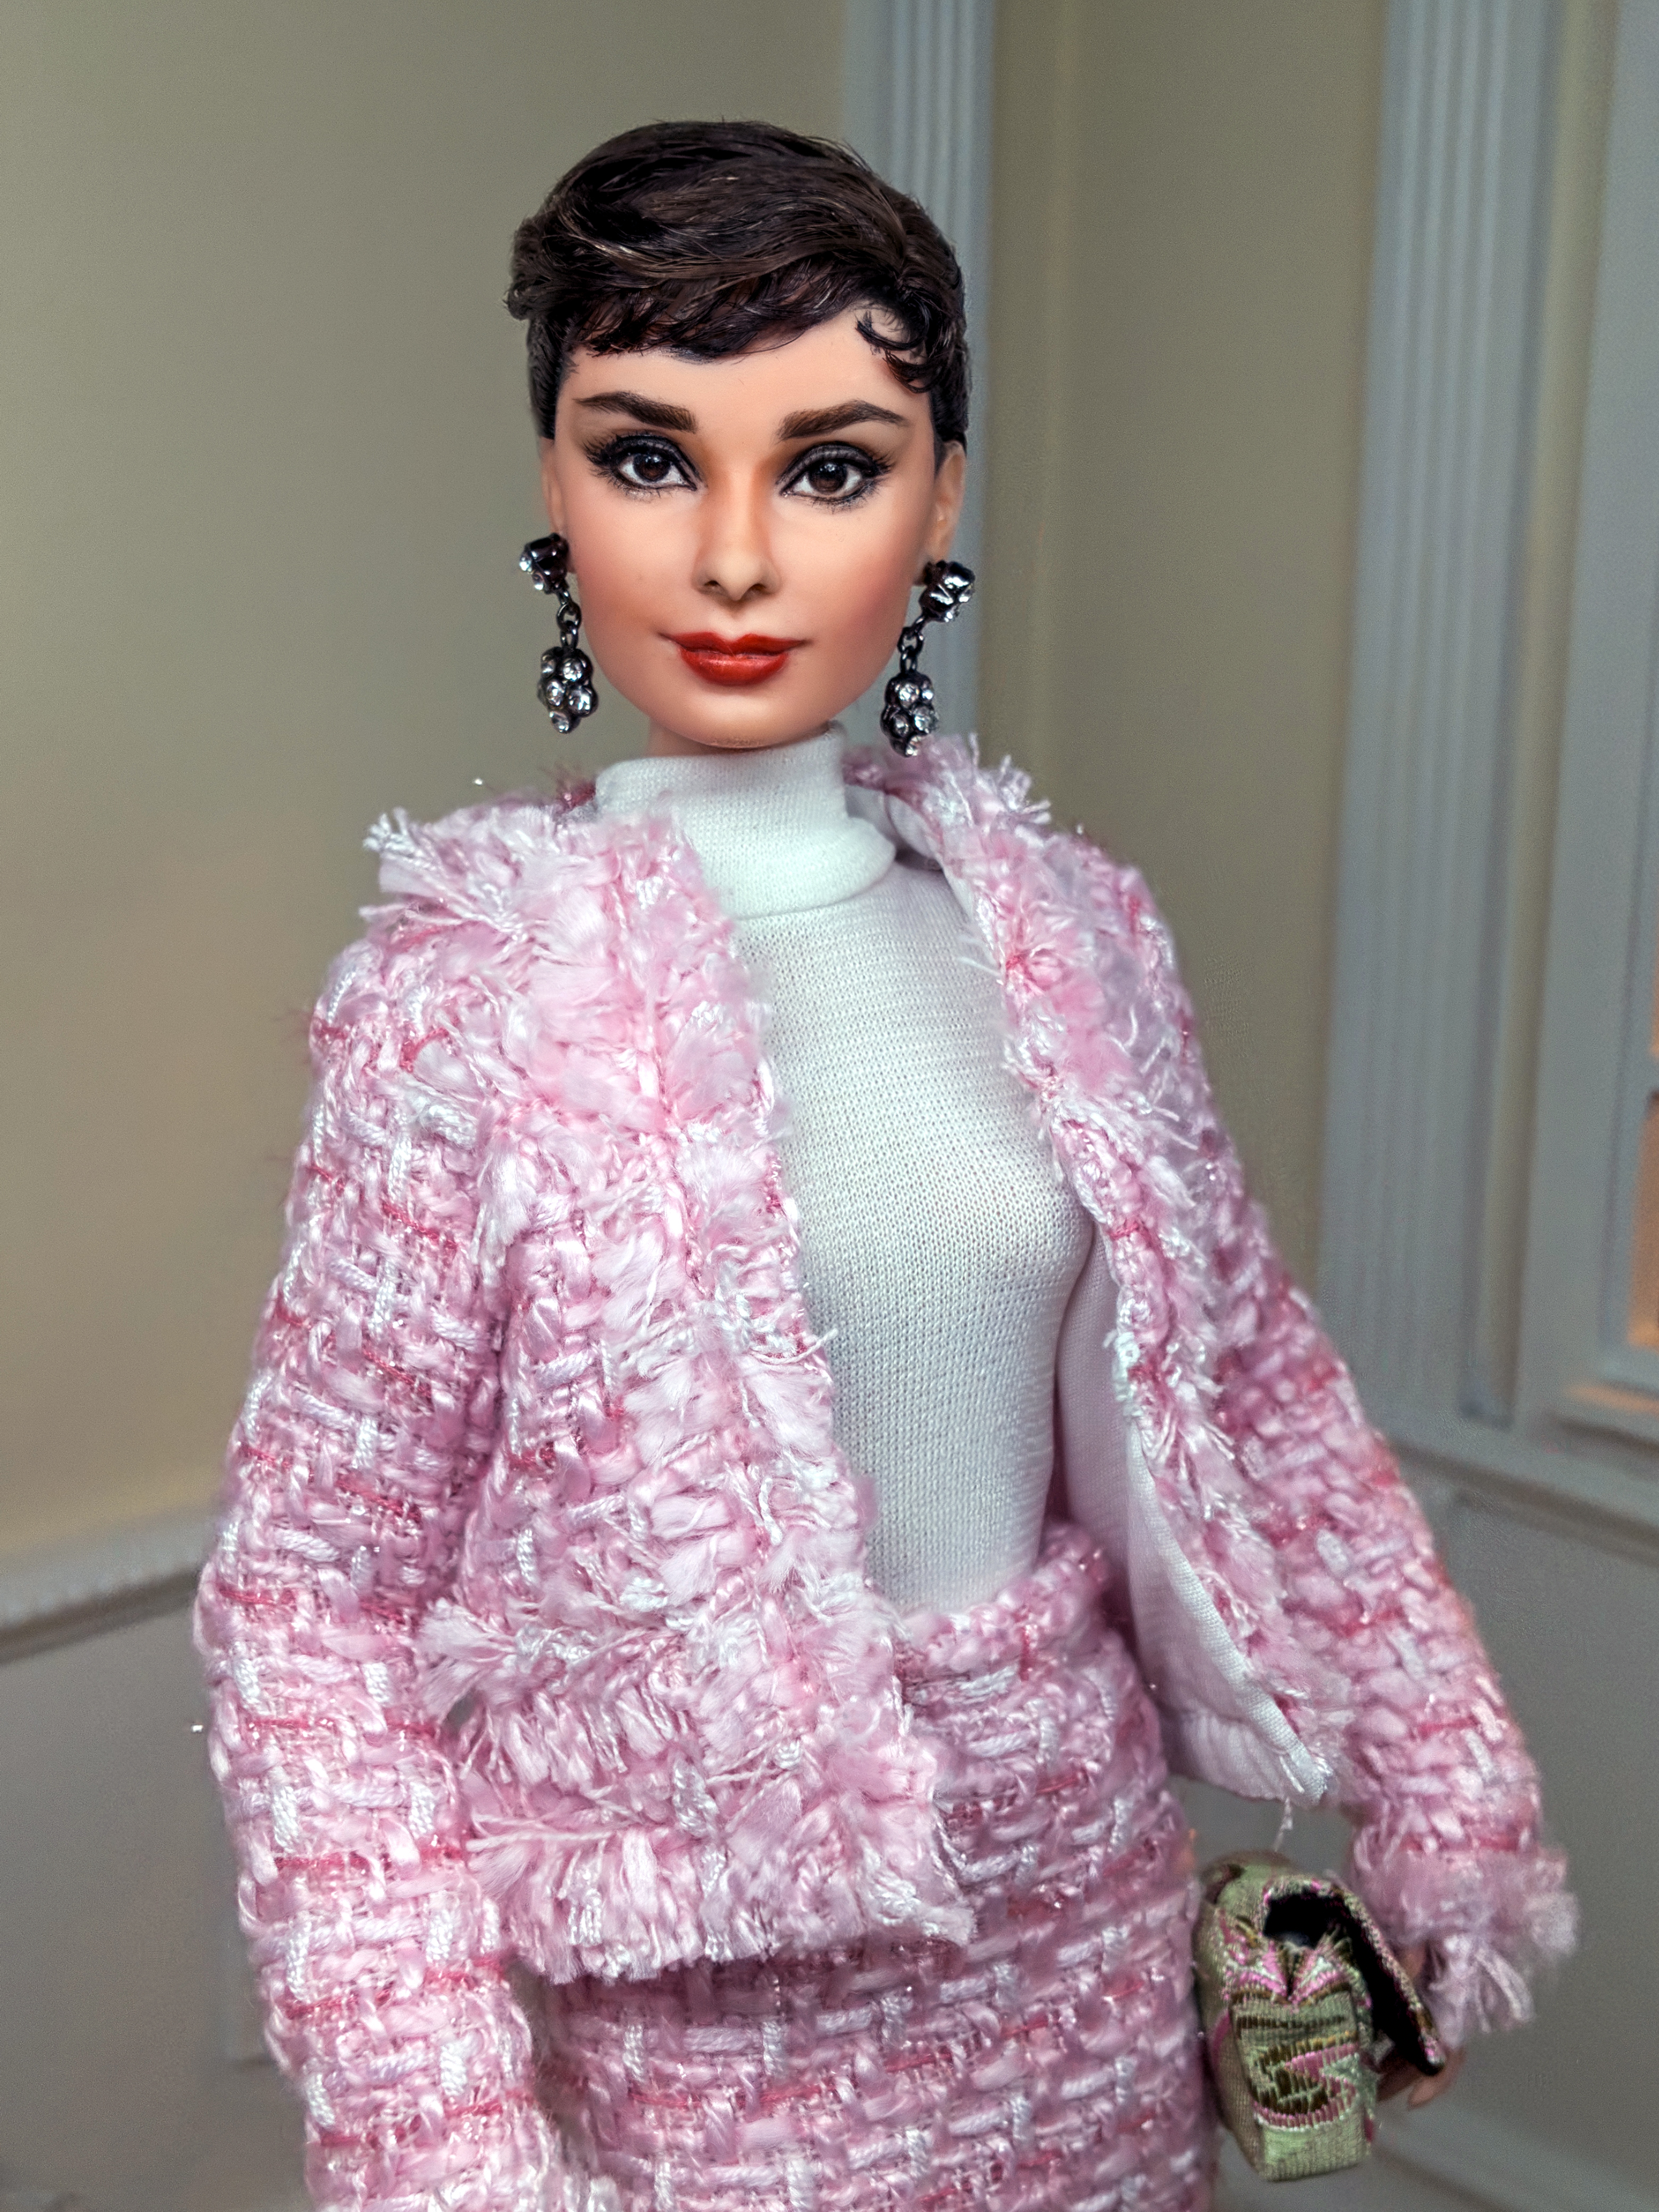 Beautifully crafted fashions!
on Etsy (www.etsy.com/shop/elenpriv) & eBay (www.ebay.com/str/elenpriv)
As featured on https://1sixth.co/designers/
Elen Priv
etsy and Ebay
Yoshkar-Ola, Russia
Elena creates fashions for Fashion Royalty, Barbie, Tonner & Sybarite Dolls. Shop ELENA PEREDREEVA's large variety of creations.
More images on FLICKR https://www.flickr.com/photos/elenpriv.